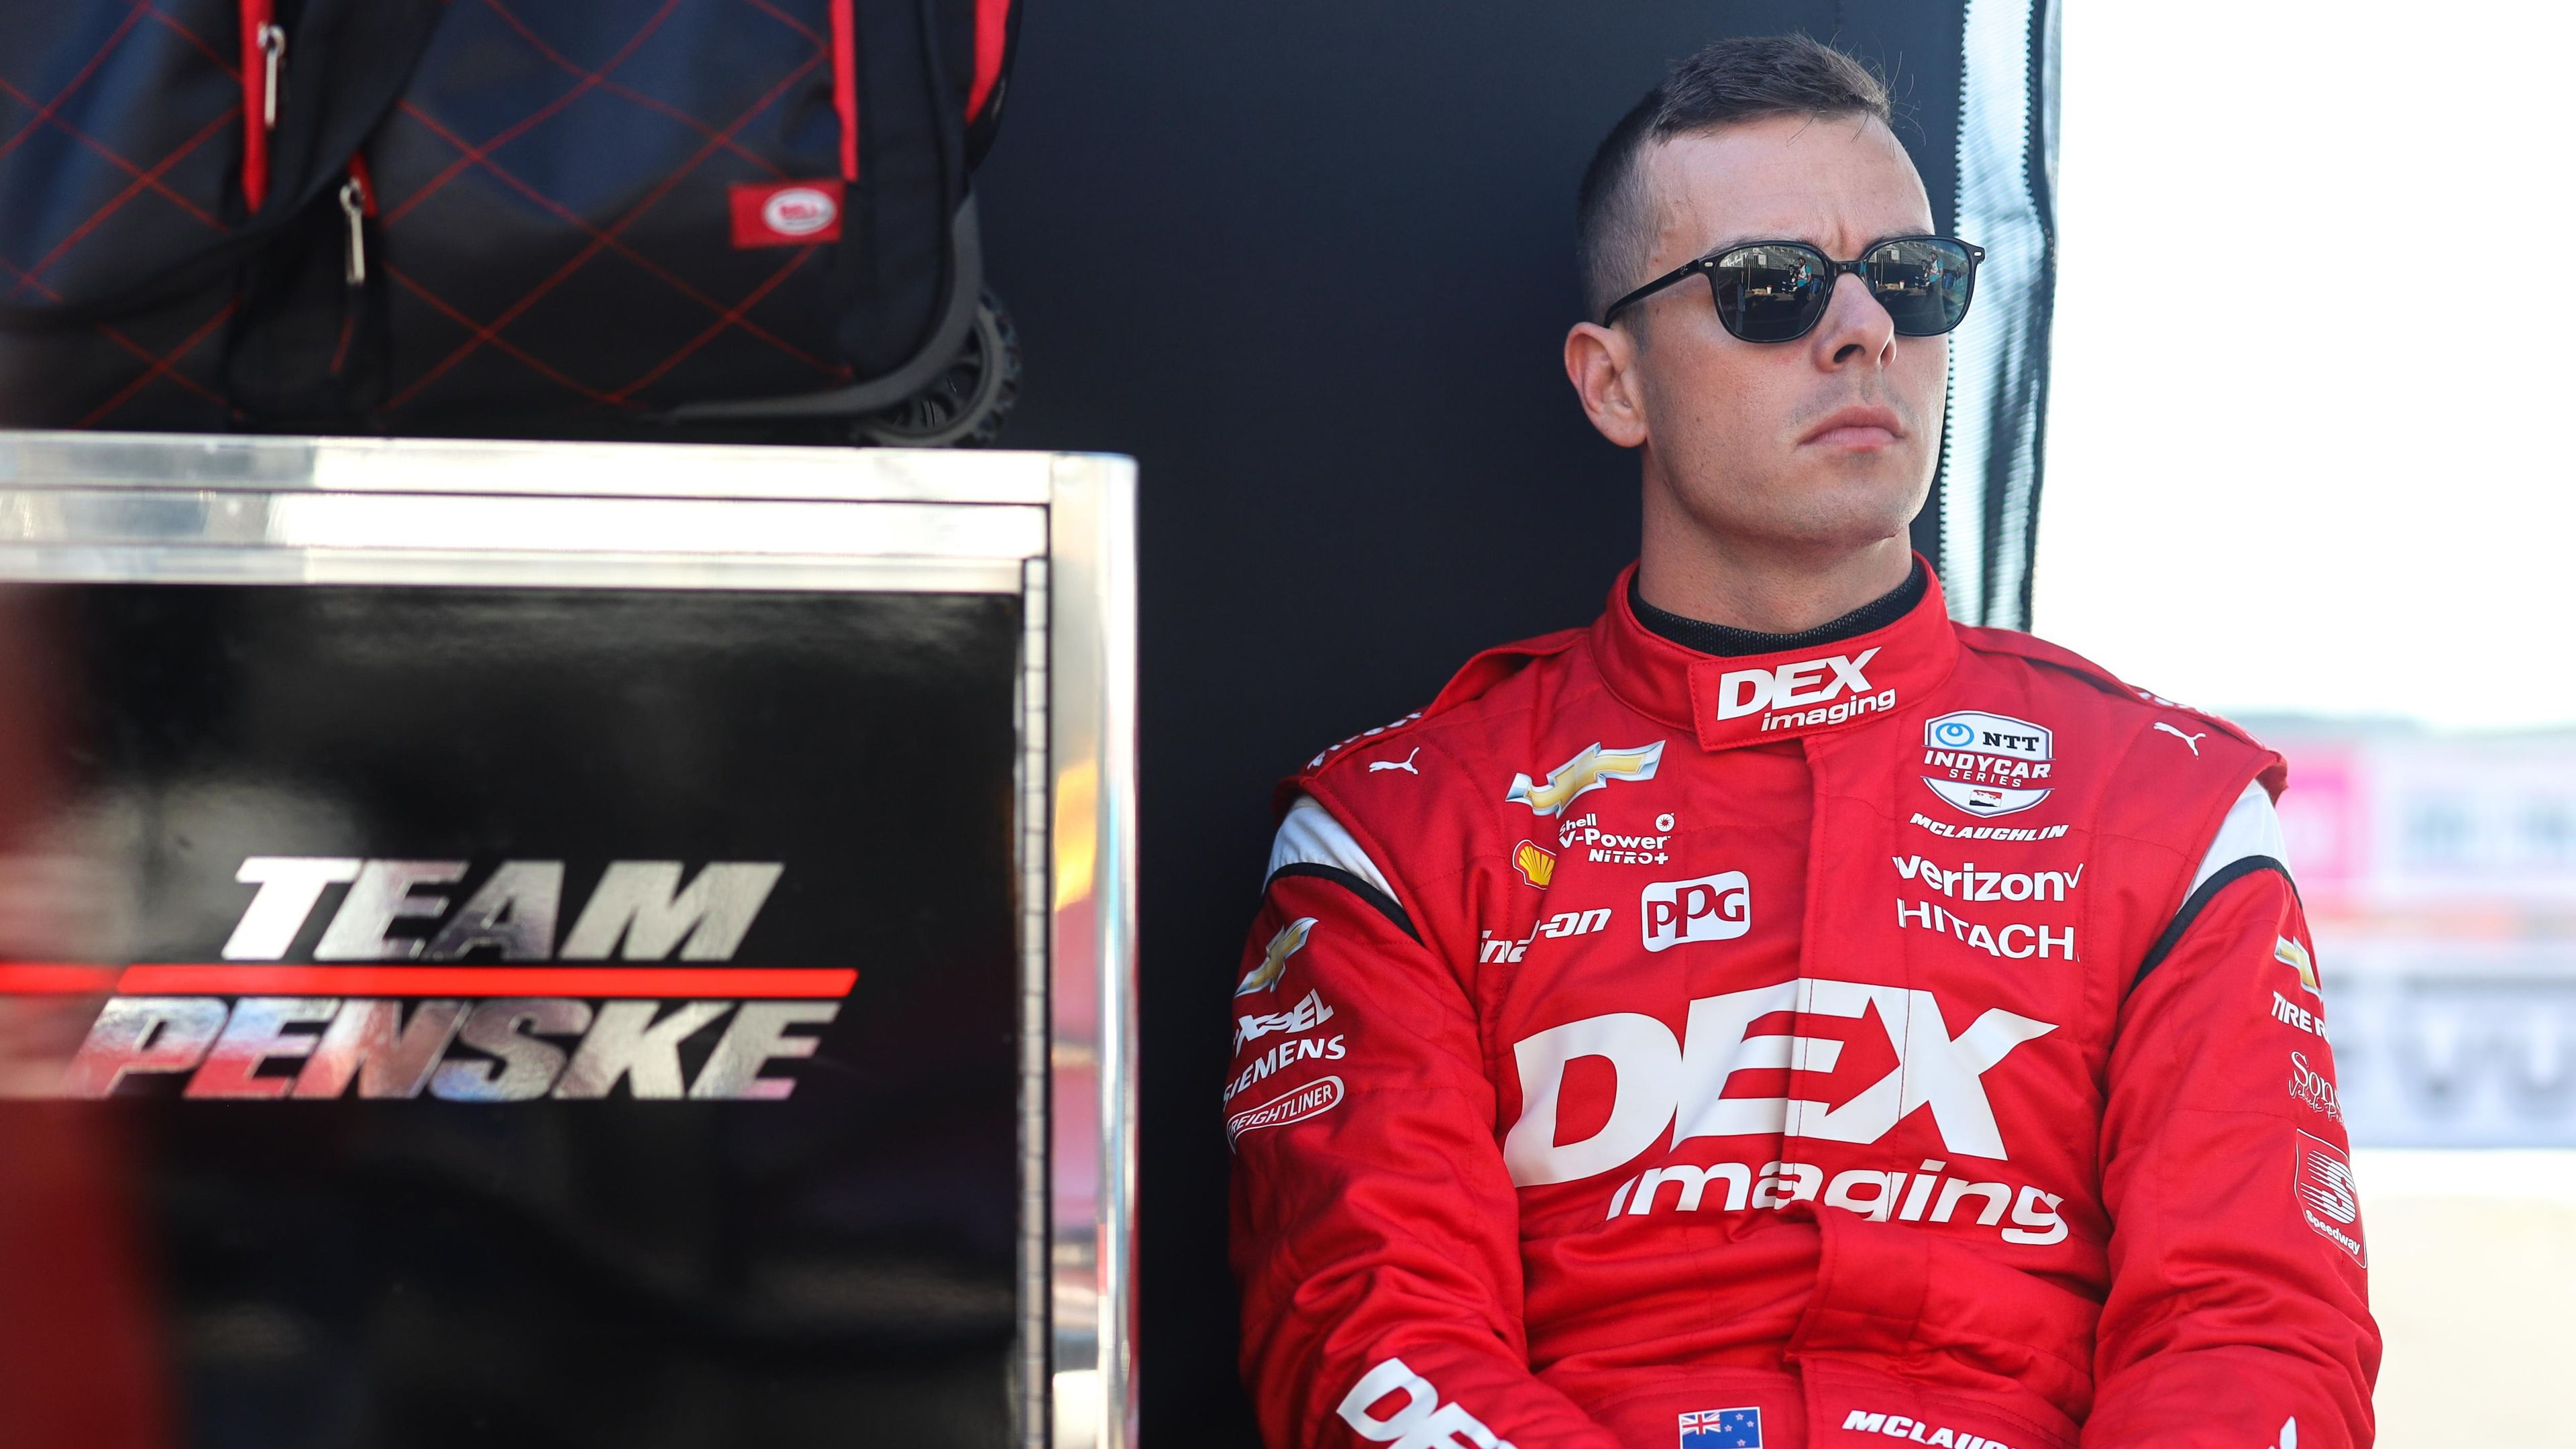 Scott McLaughlin races for Team Penske in the IndyCar Series.